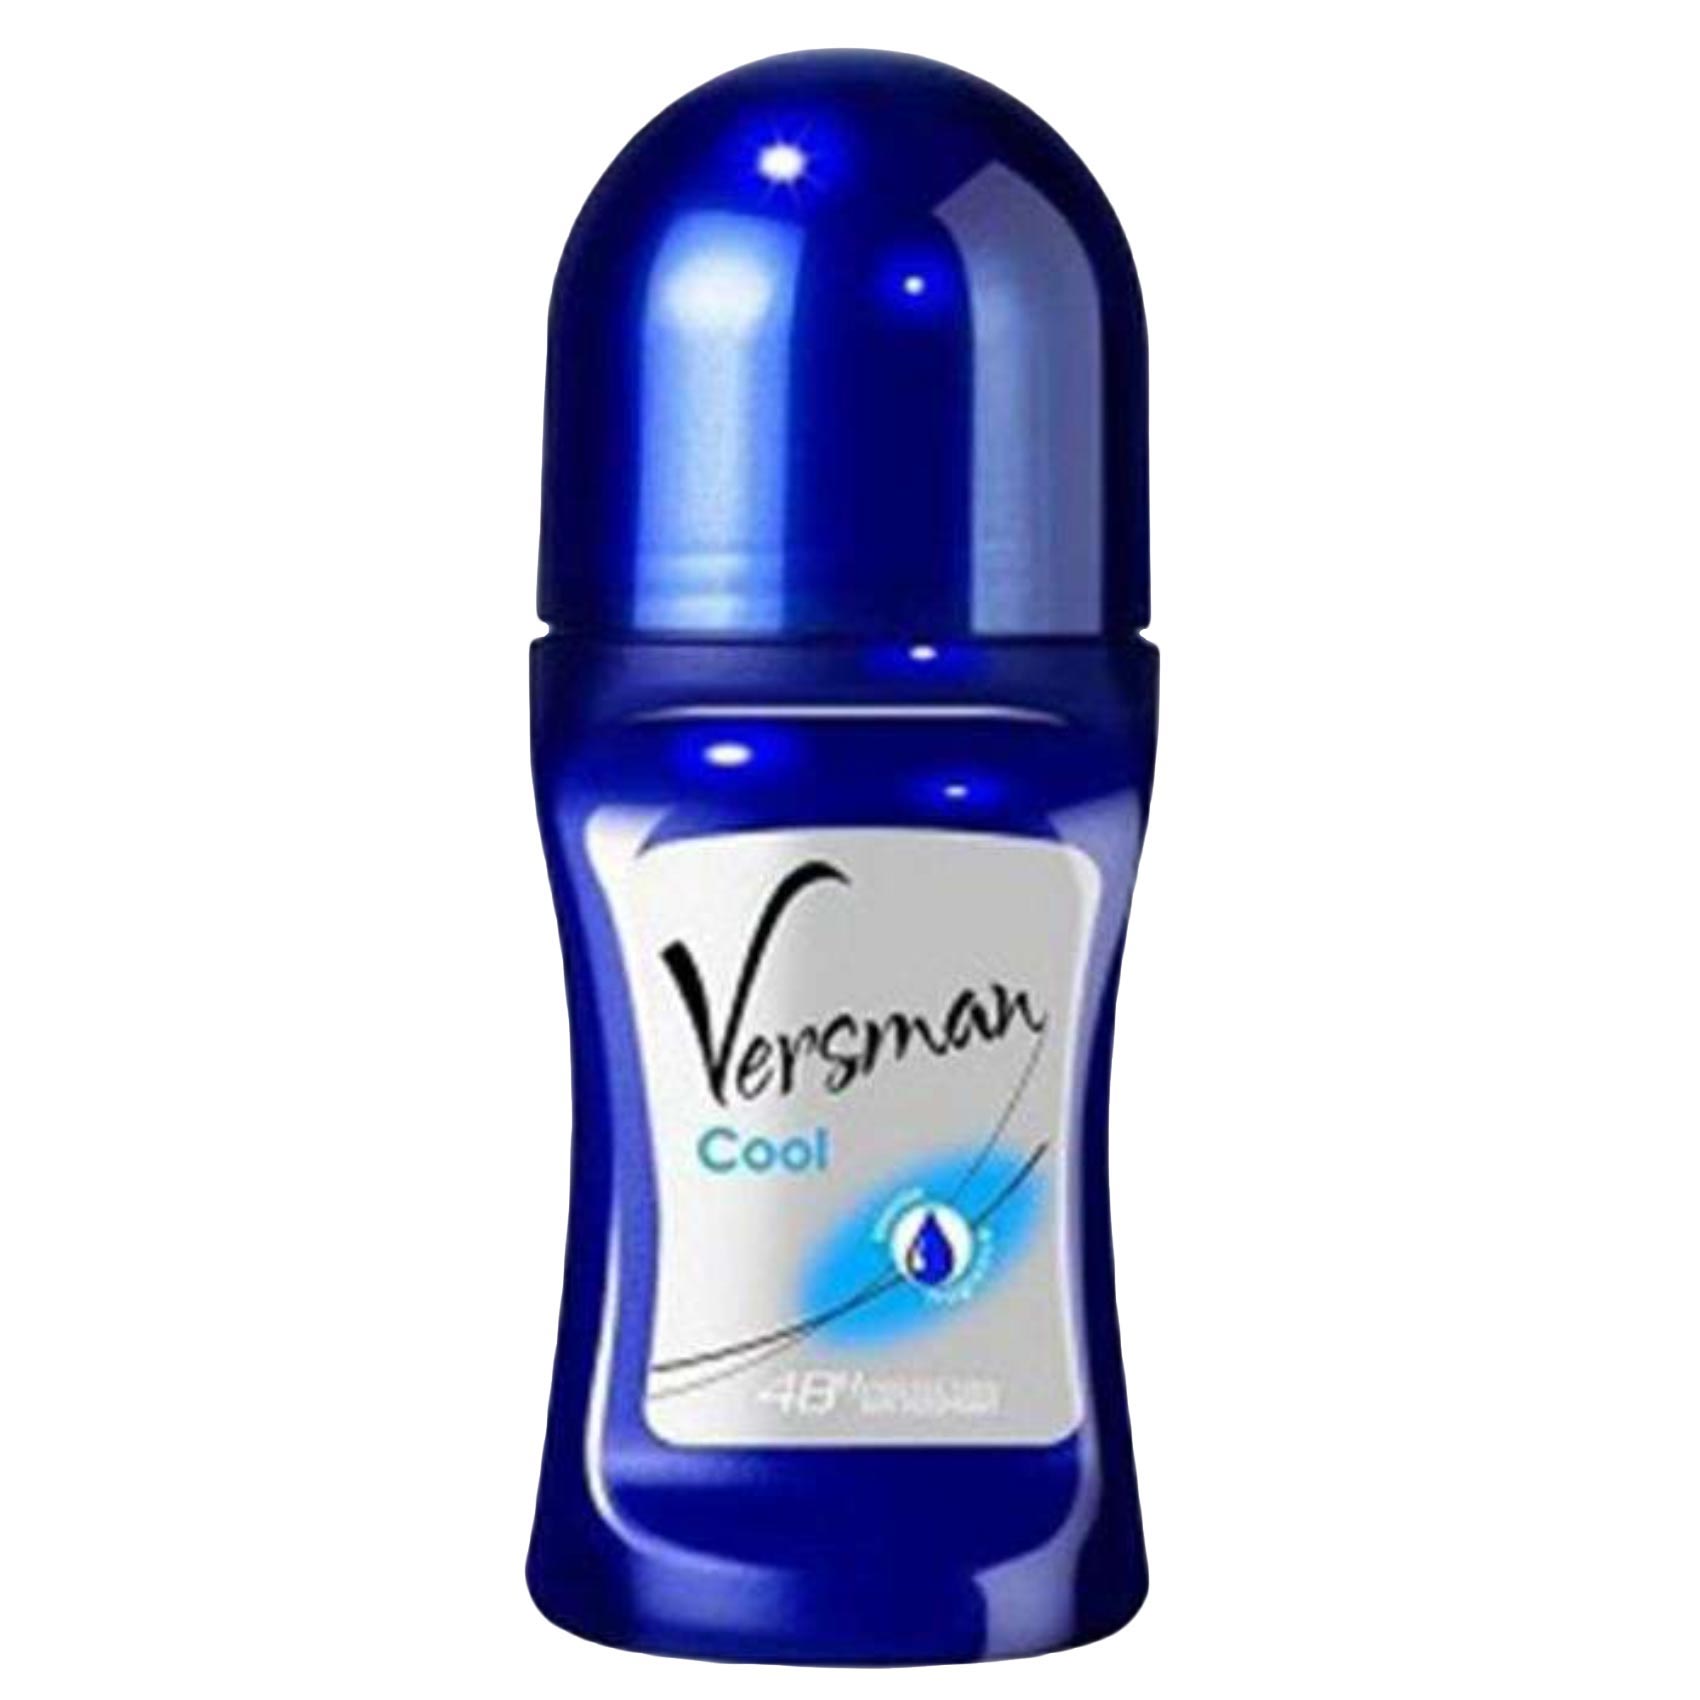 Versman Cool Anti-Perspirant Deodorant Roll On 50ml